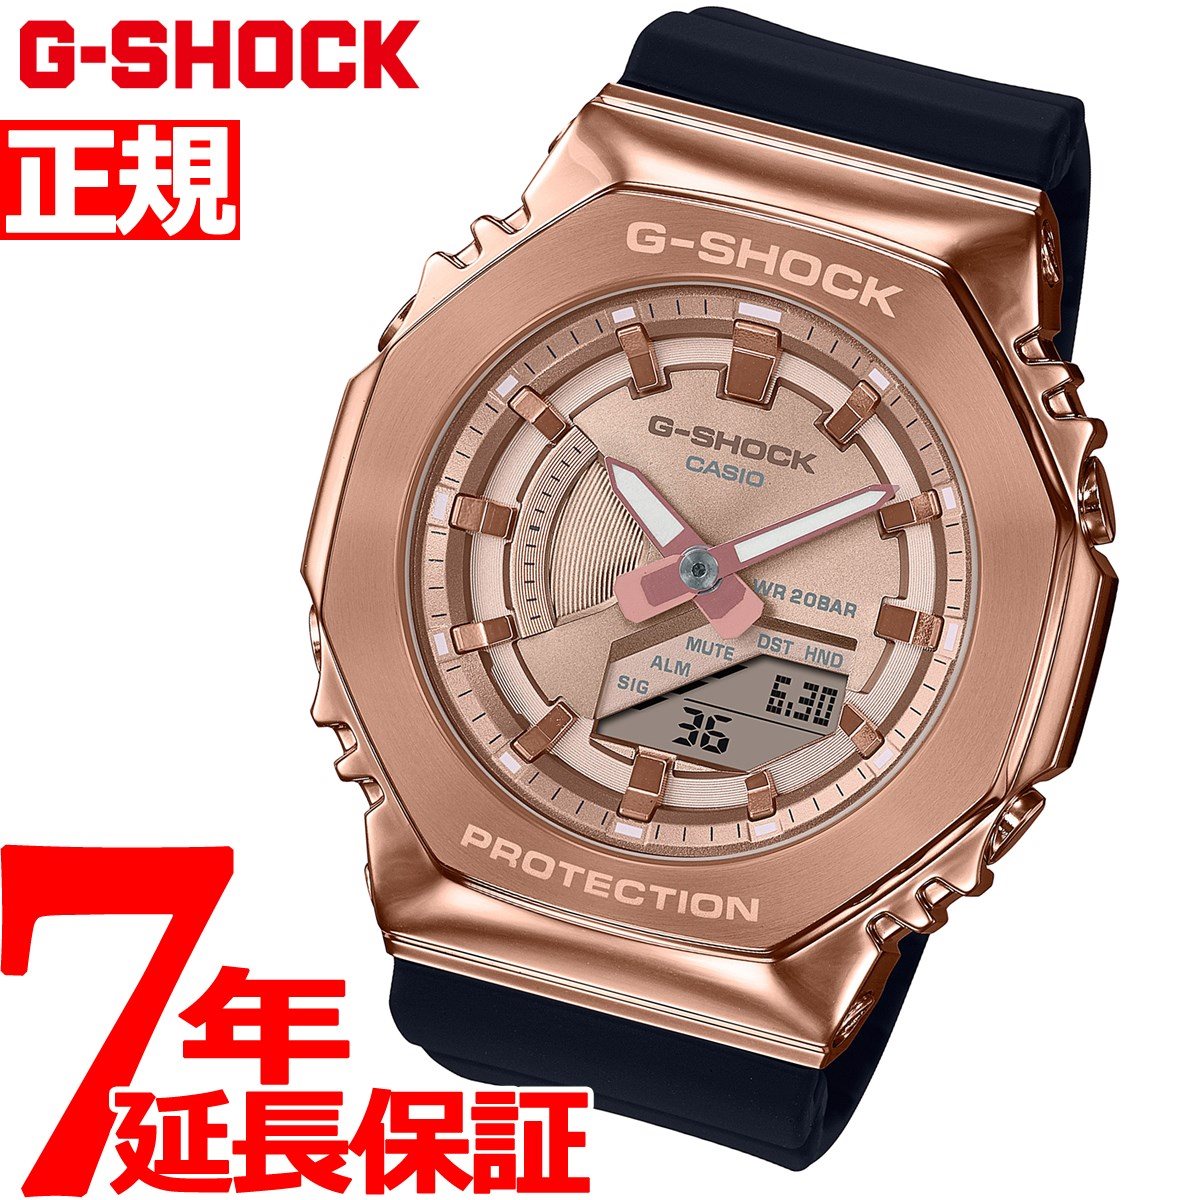 G-SHOCK ジーショック カシオ 腕時計 ミッドサイズモデル 国内正規品